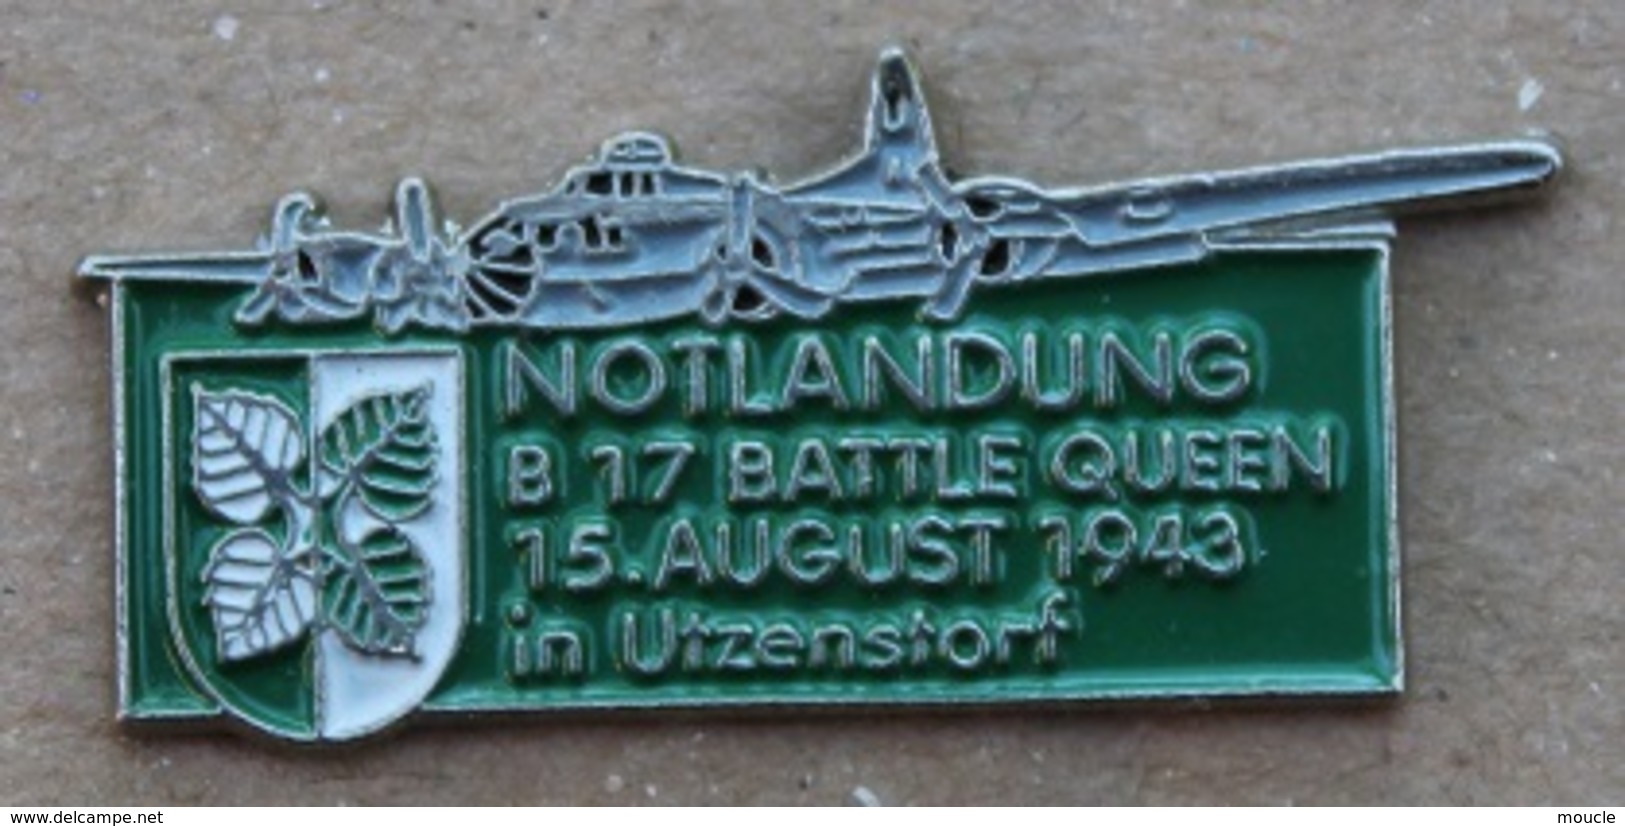 AVION - NOTLANDUNG - B17 BATTLE QUEEN - 15 AUGUST 1943 IN UTZENSTORF - PLANE  - SUISSE - SCHWEIZ - SWITZERLAND - (JAUNE) - Avions